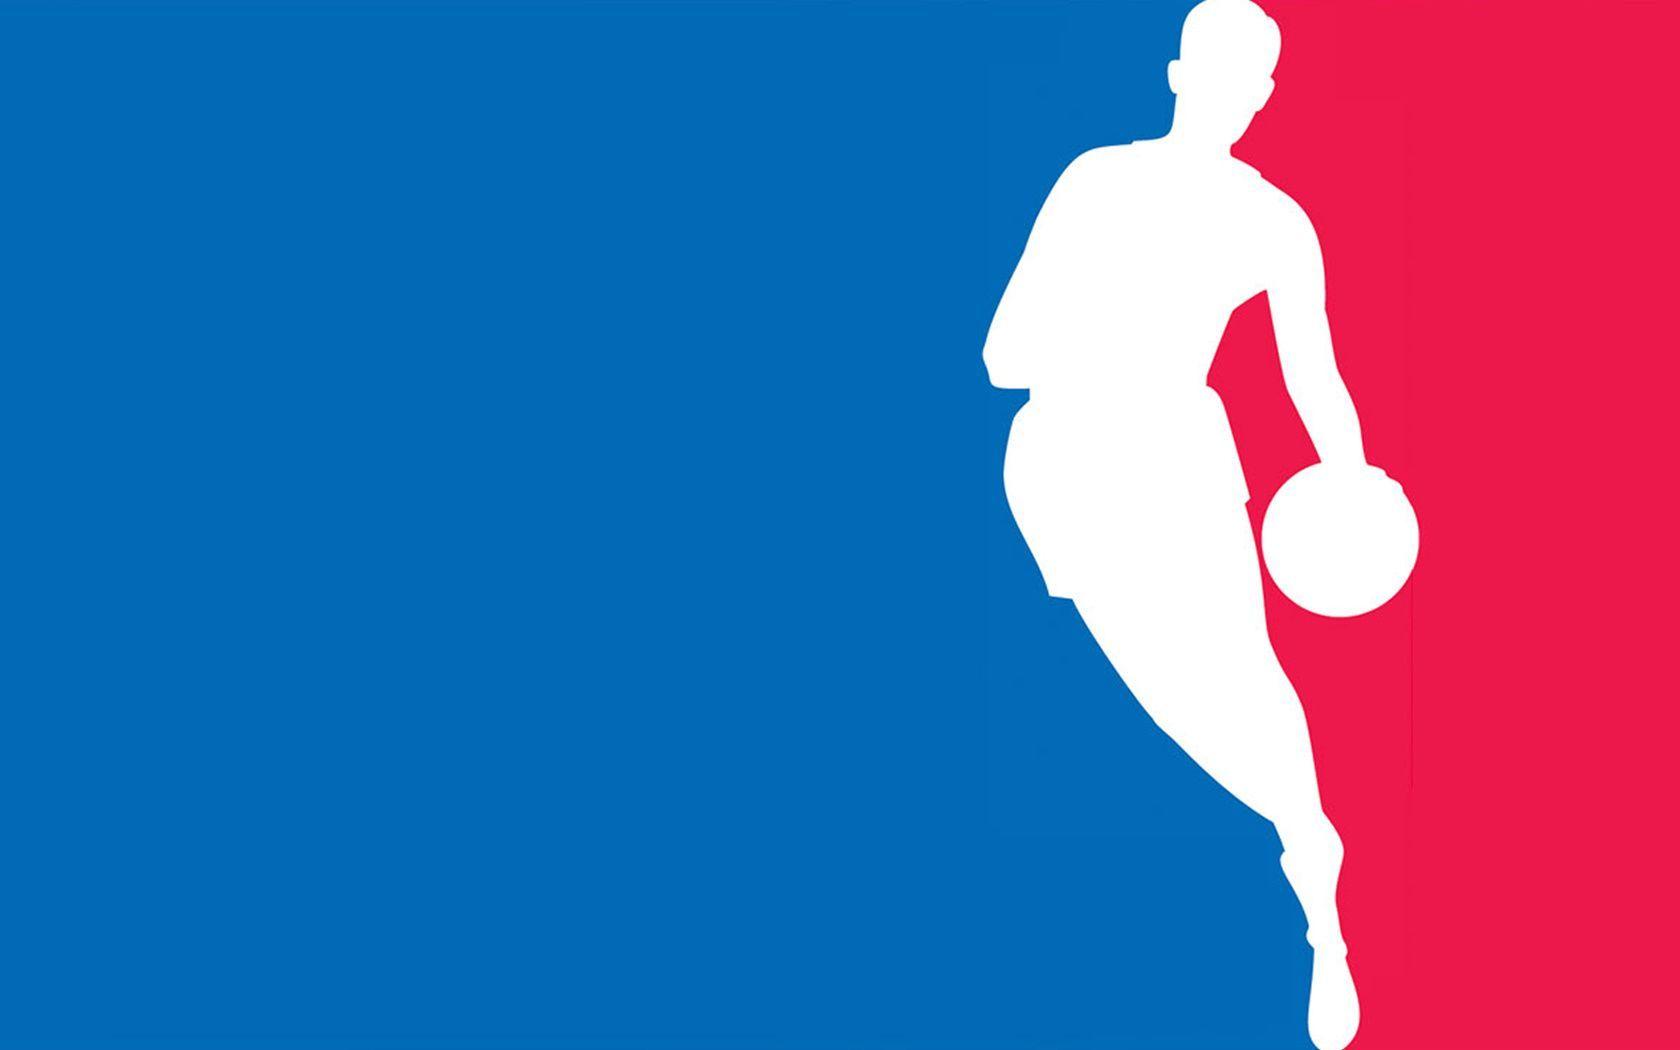 Basketball Wallpaper. Nba Logos 2015 Wallpaper